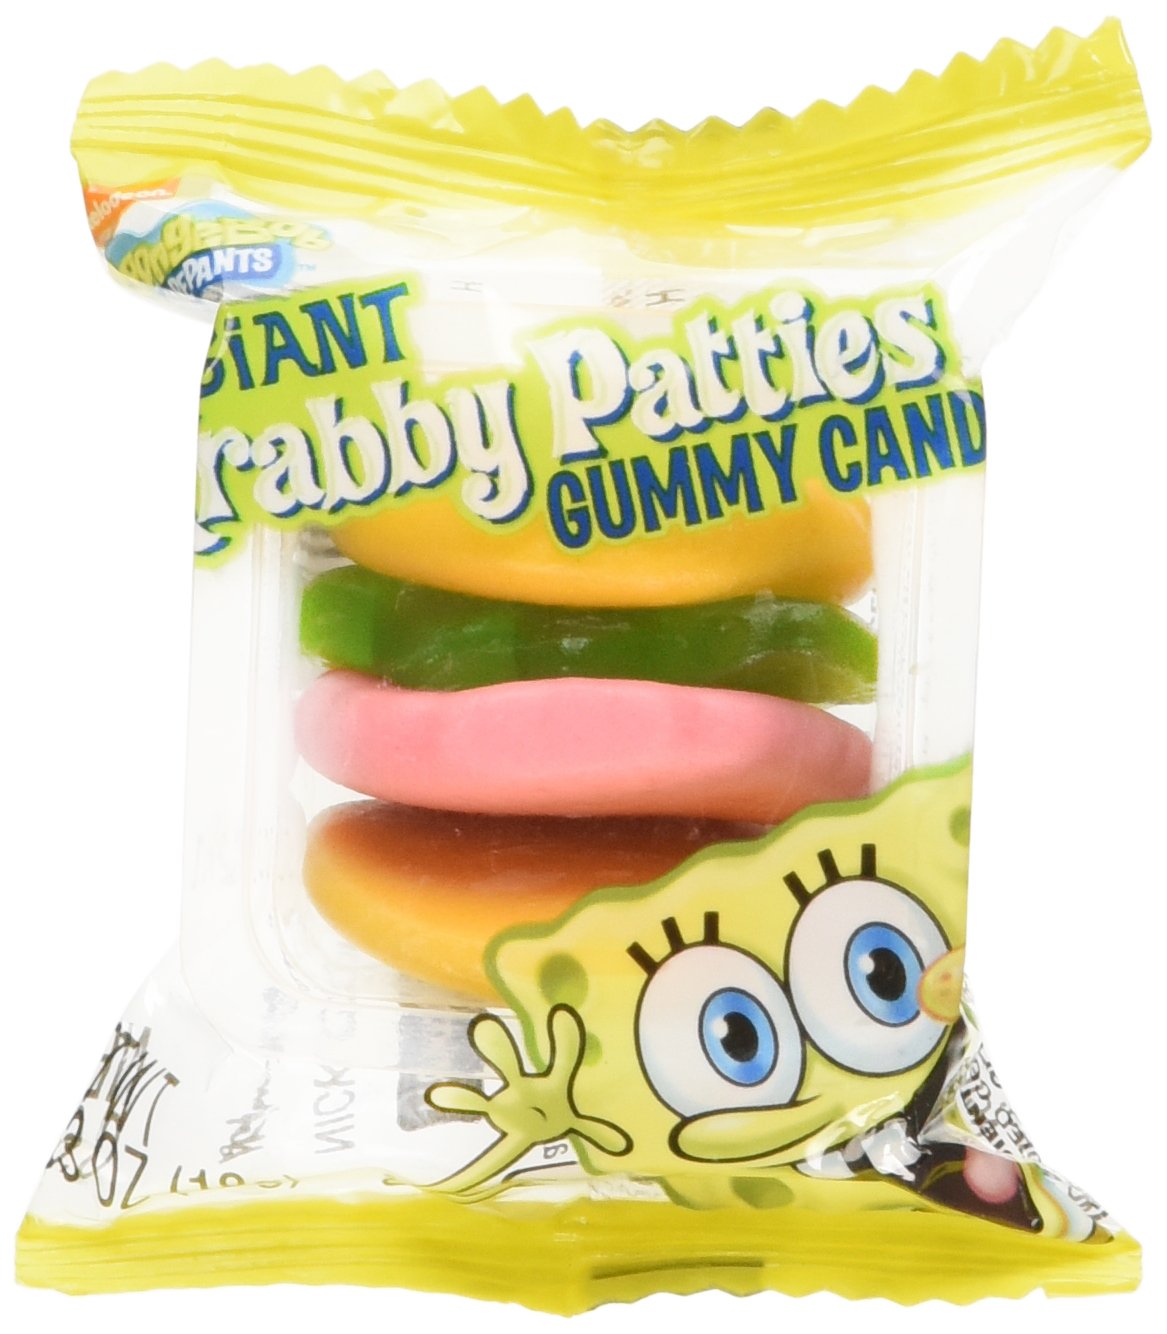 Cangreburger-Bob Esponja, Gummy Candy